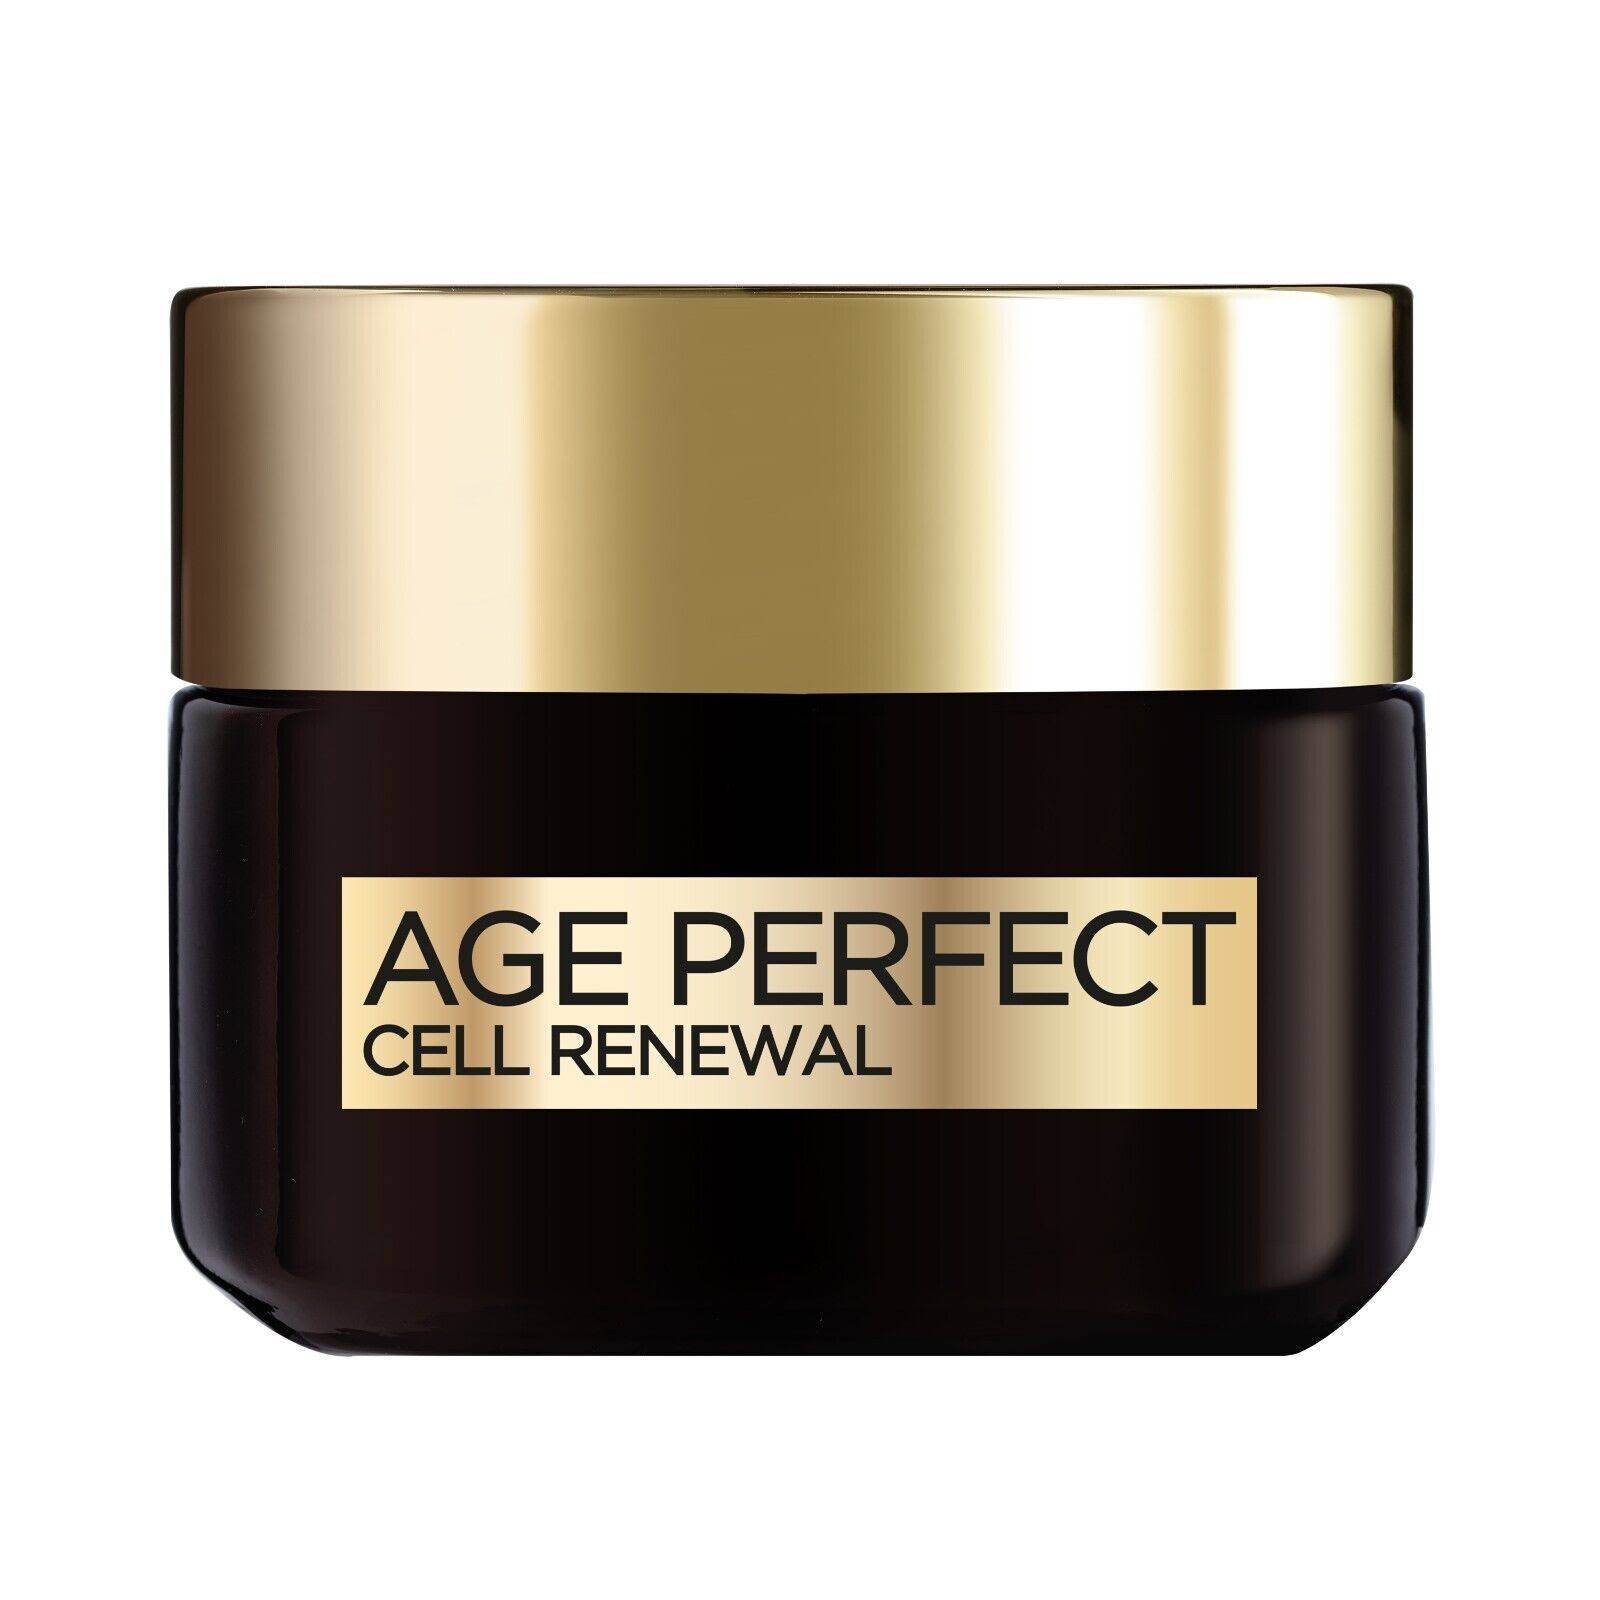 L'Oreal Paris Age Perfect Cell Renew Day Cream 50ml